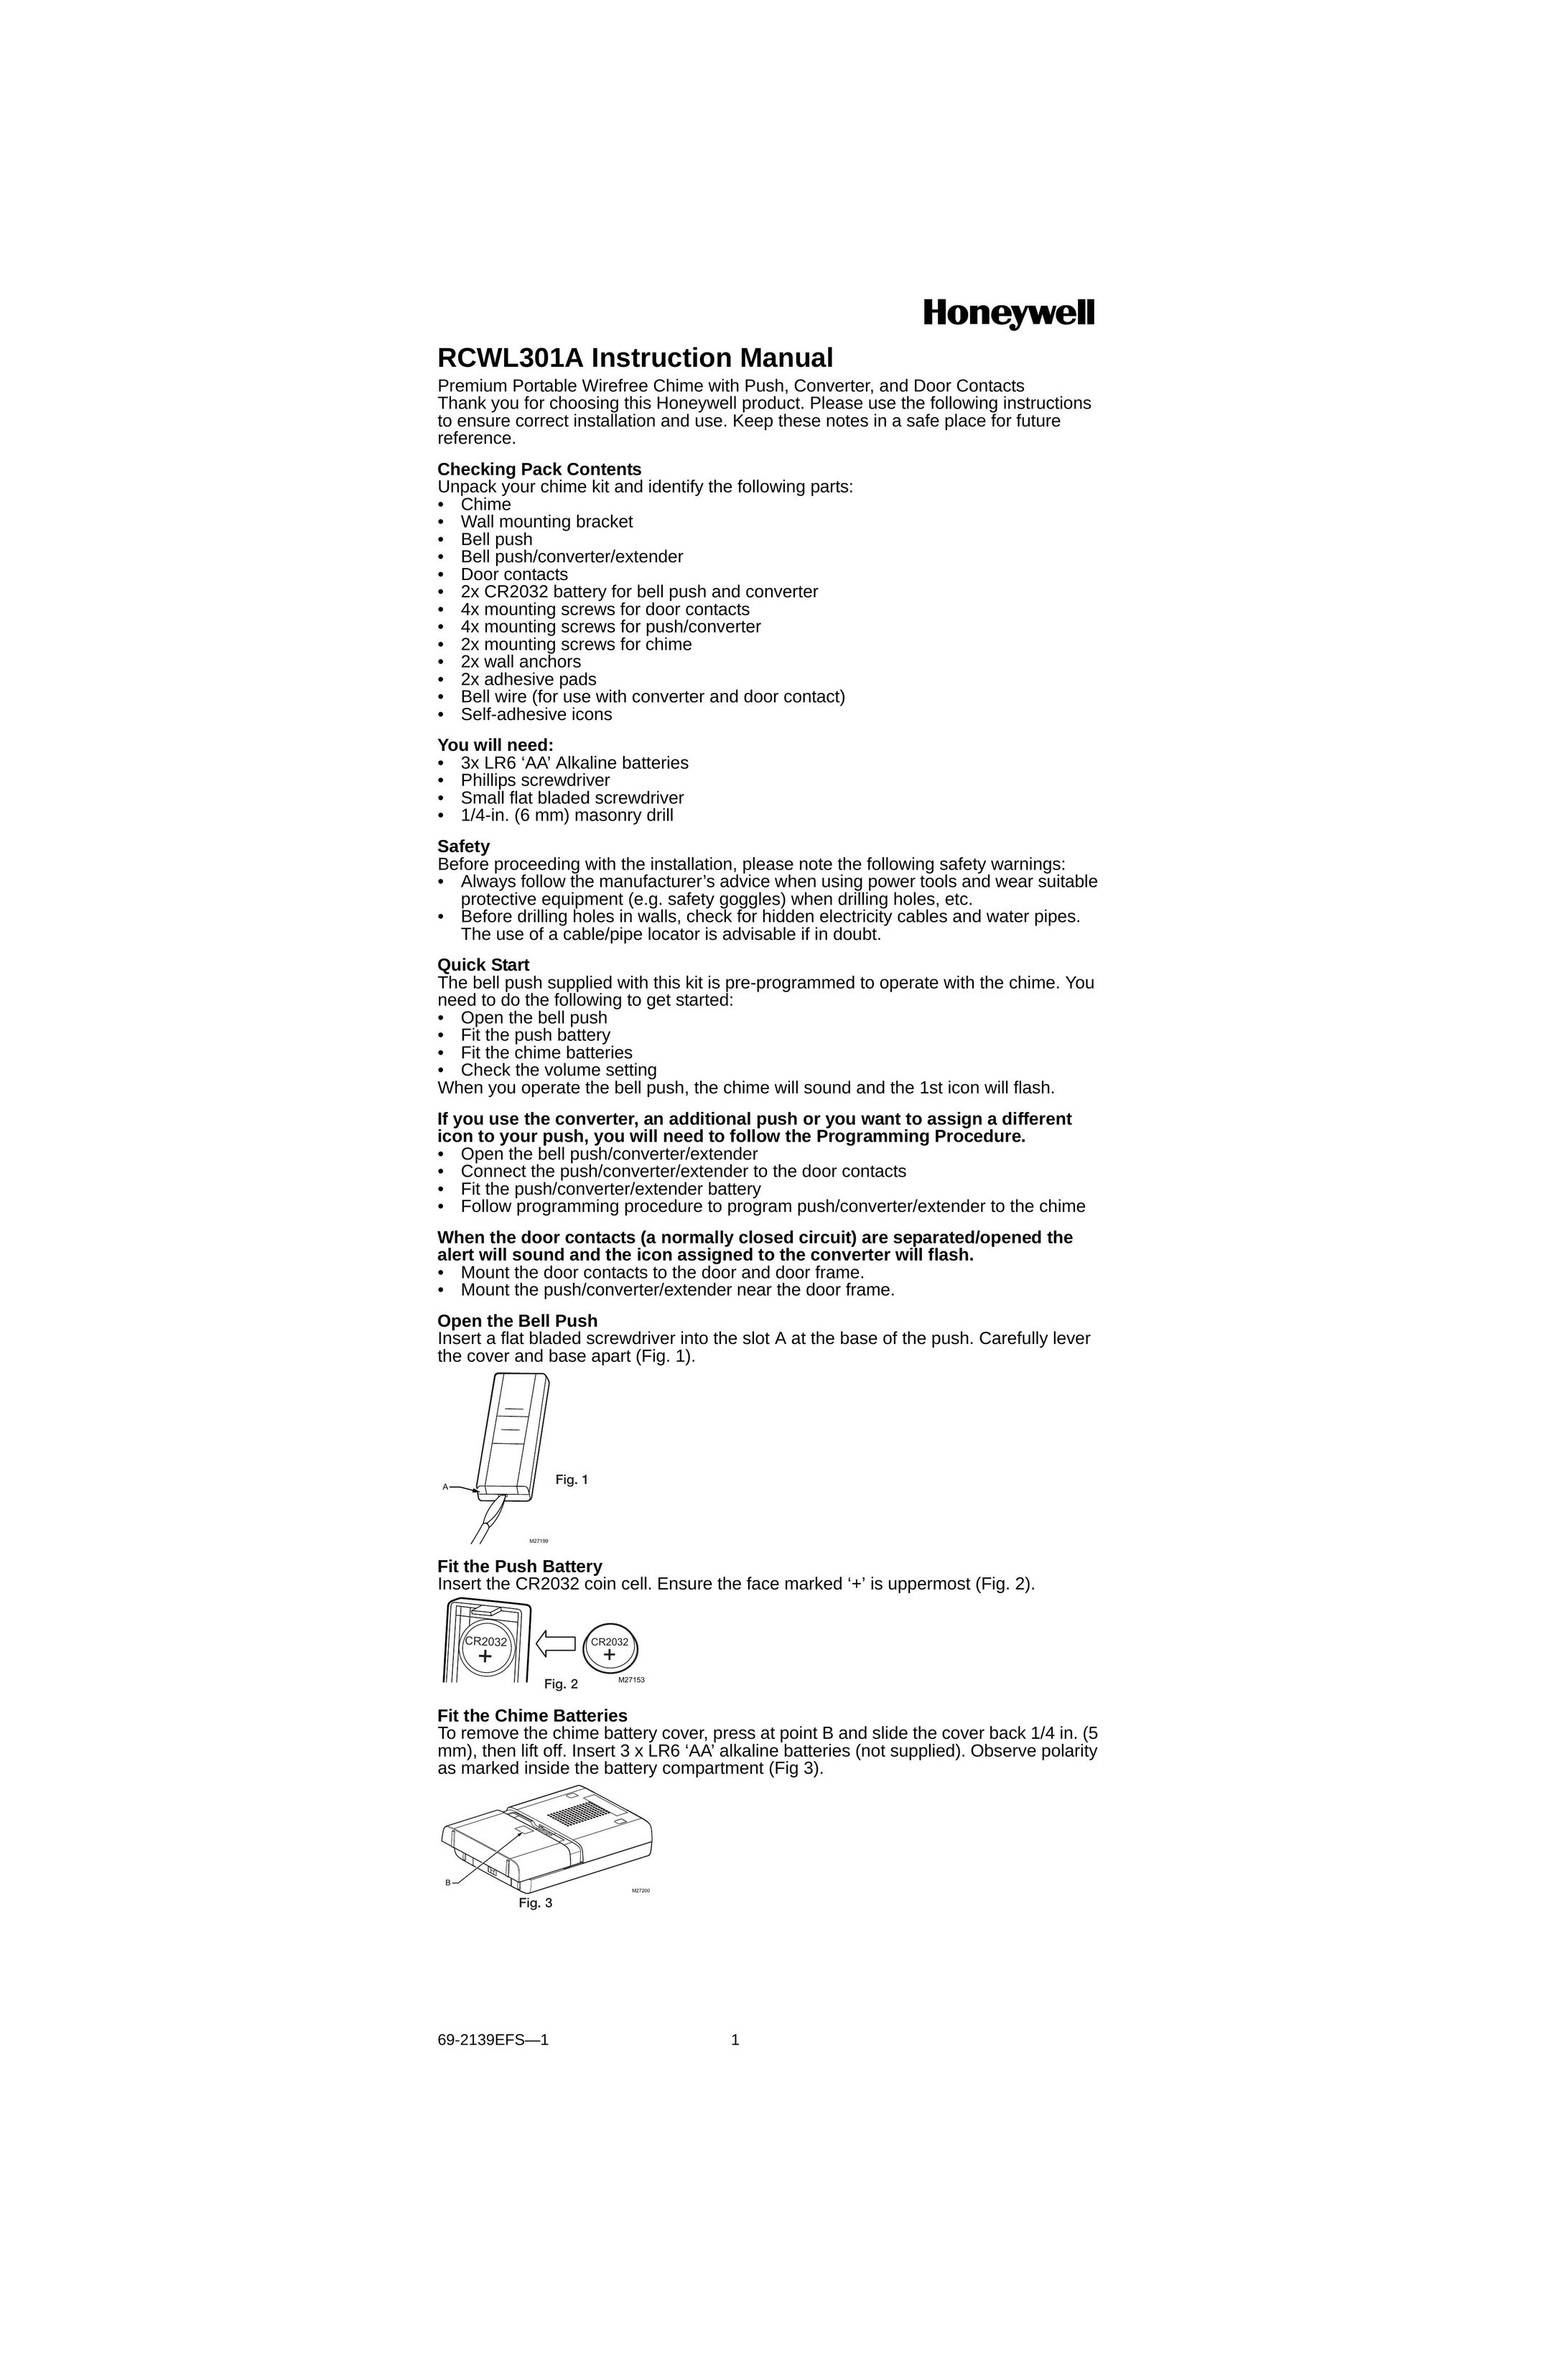 Honeywell RCWL301A Door User Manual